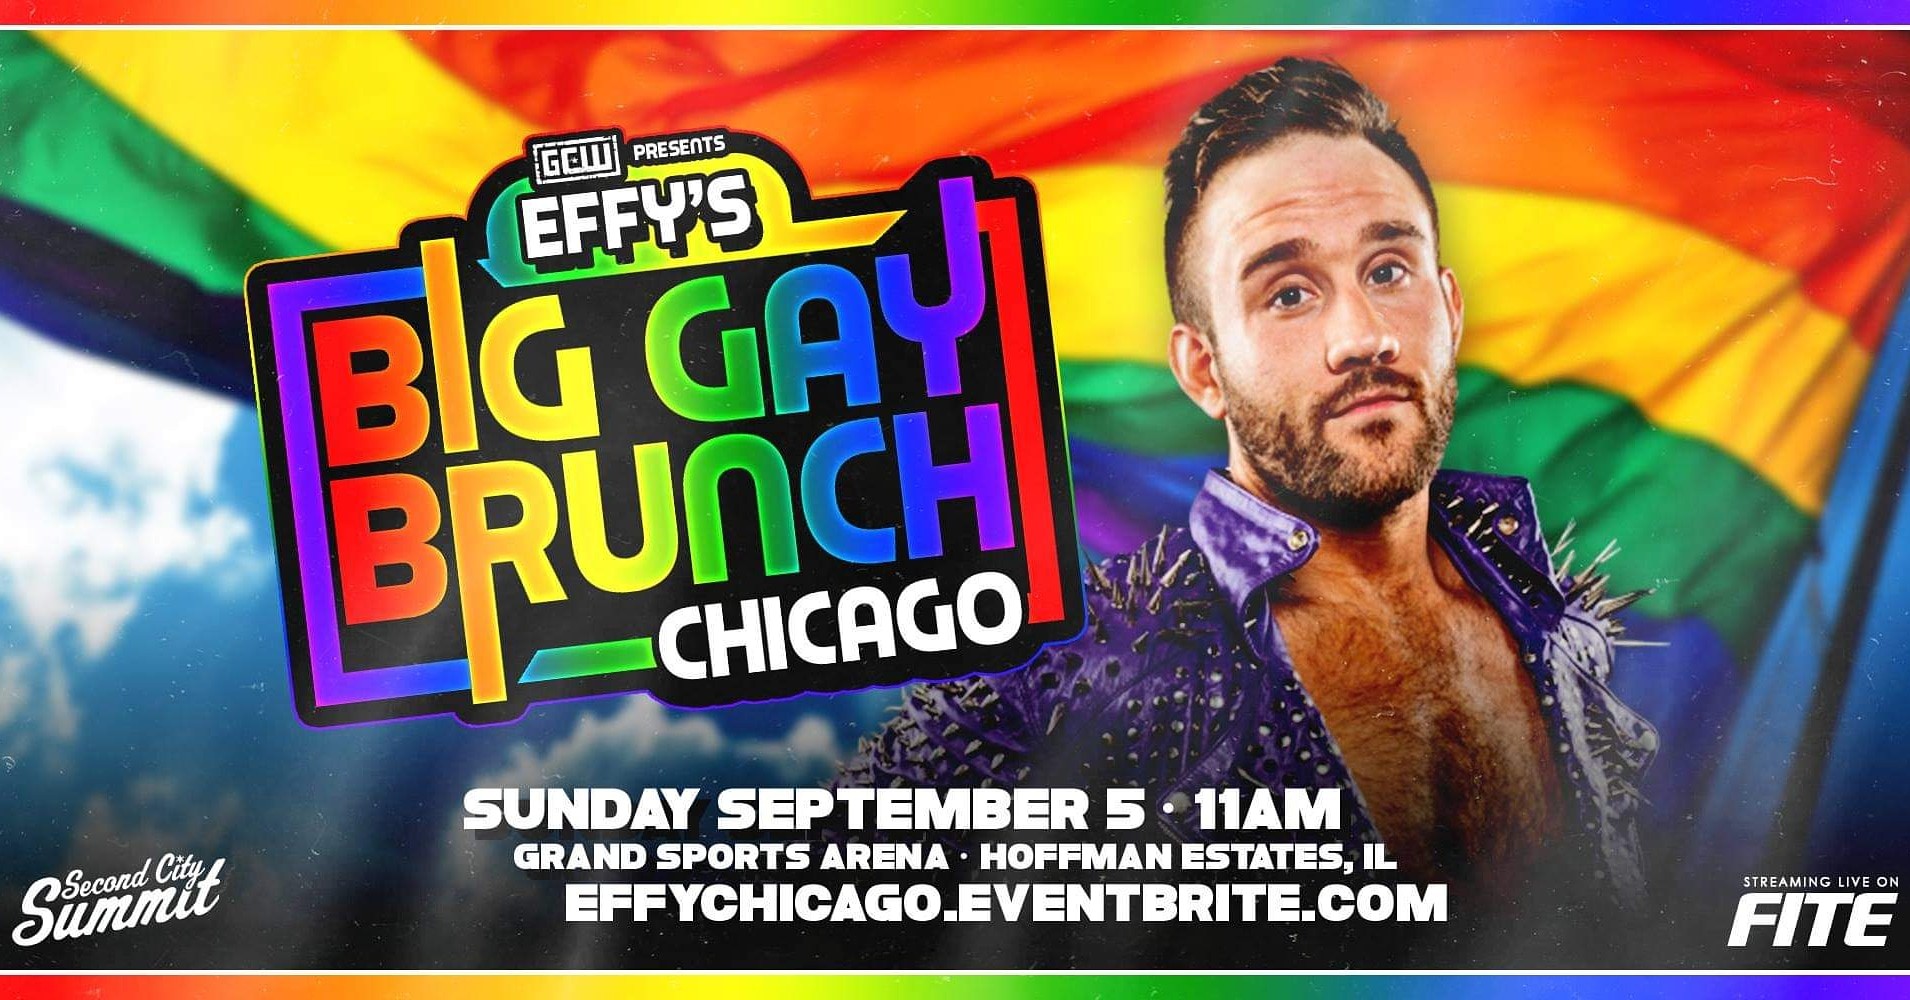 Effy's Big Gay Brunch